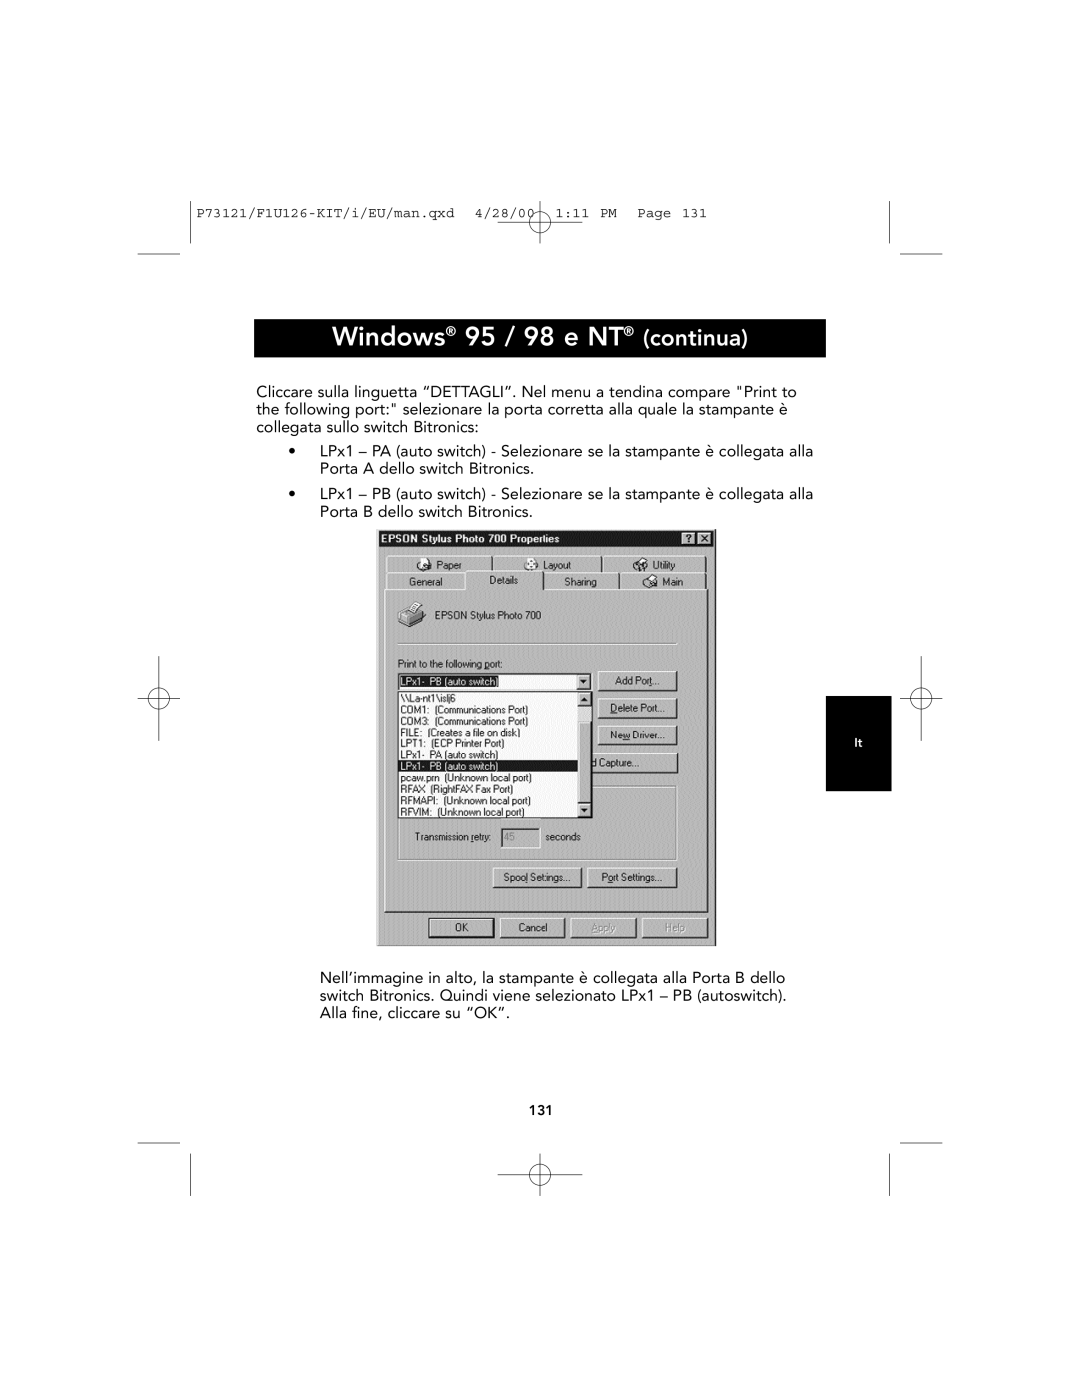 Belkin F1U126-KIT, P73121 user manual Windows 95 / 98 e NT continua 